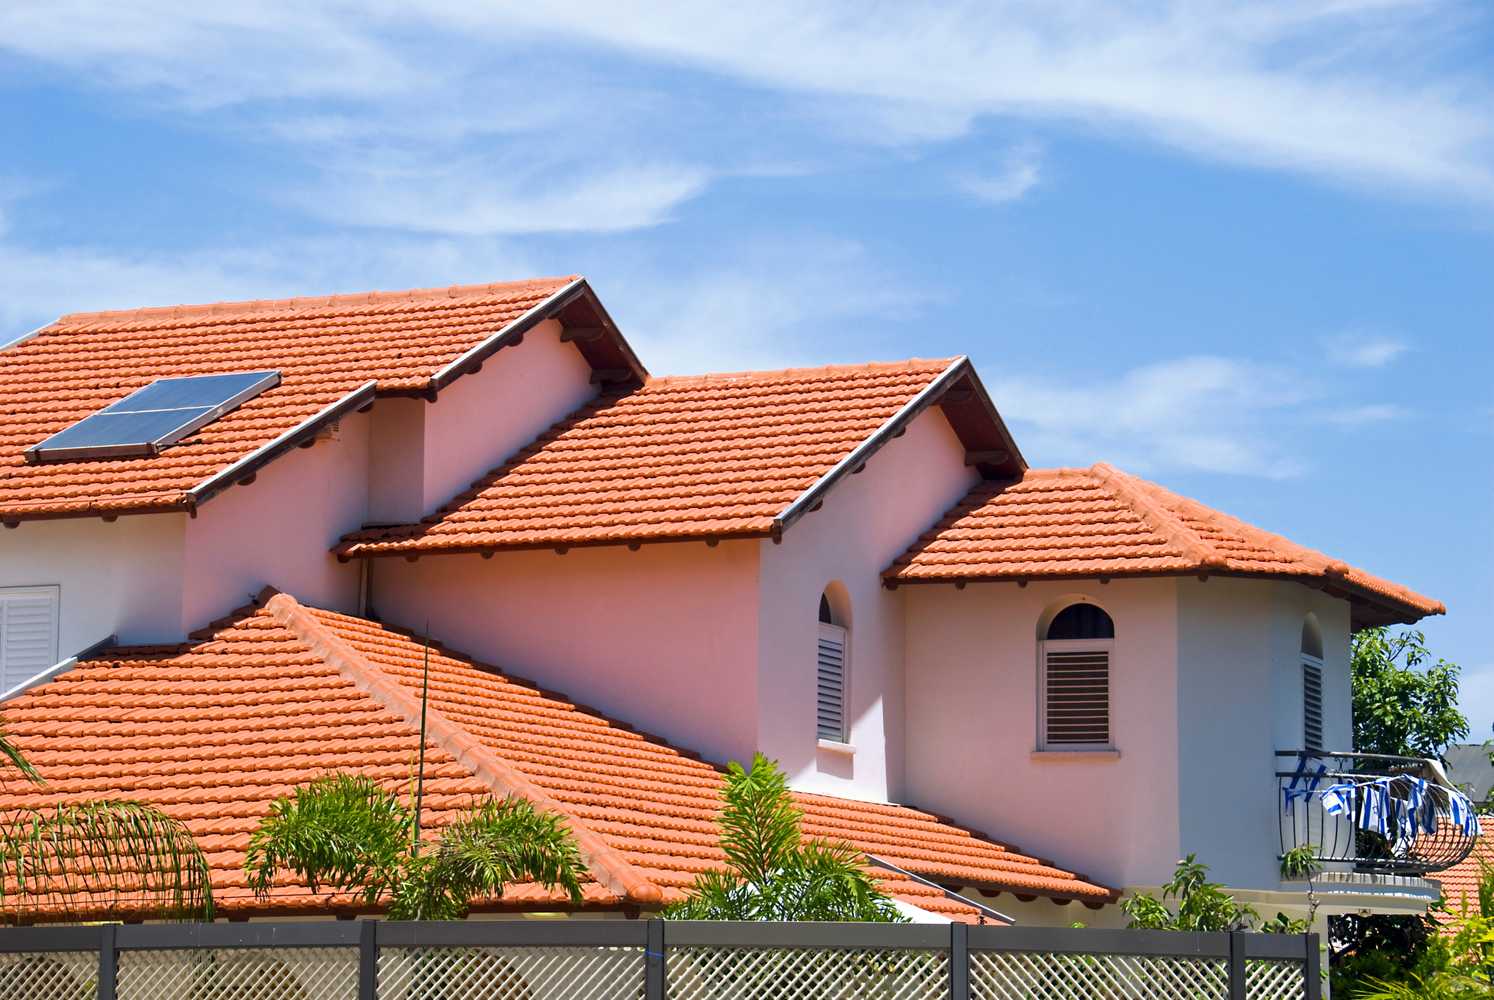 Siding Contractor, Roof Repair, Slate Roof, Builder, Roofing Contractors 